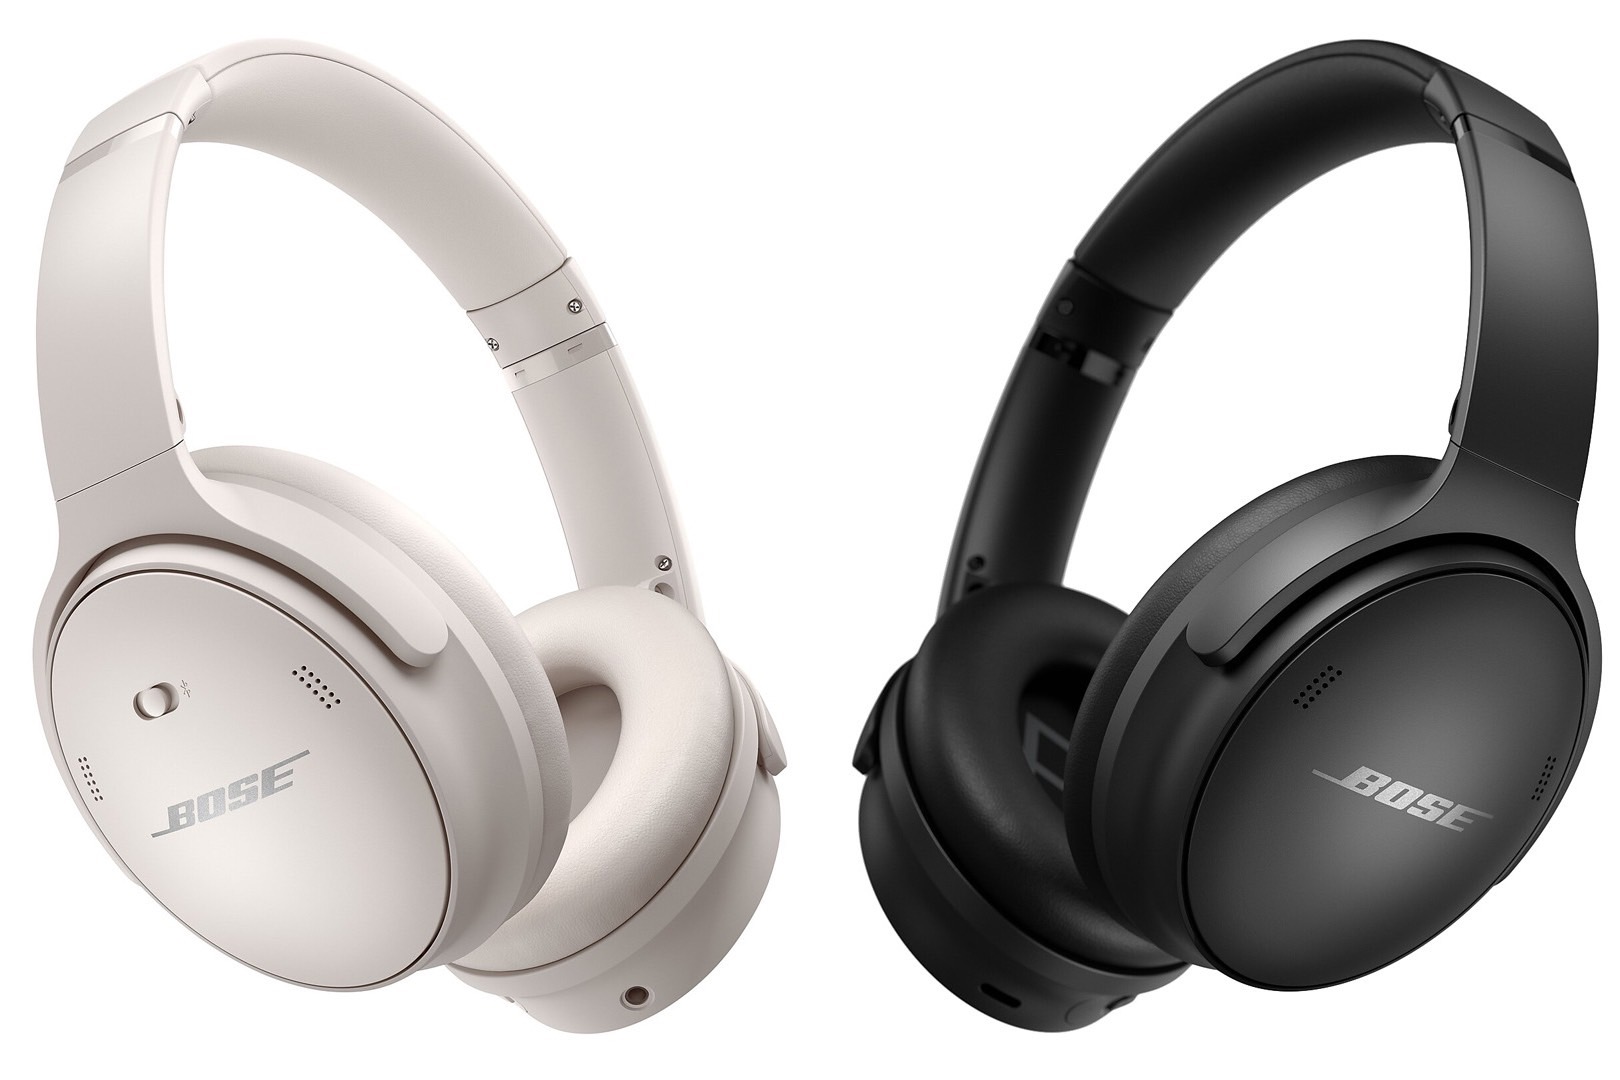 Bose QuietComfort 45 headphones in black and white colors.